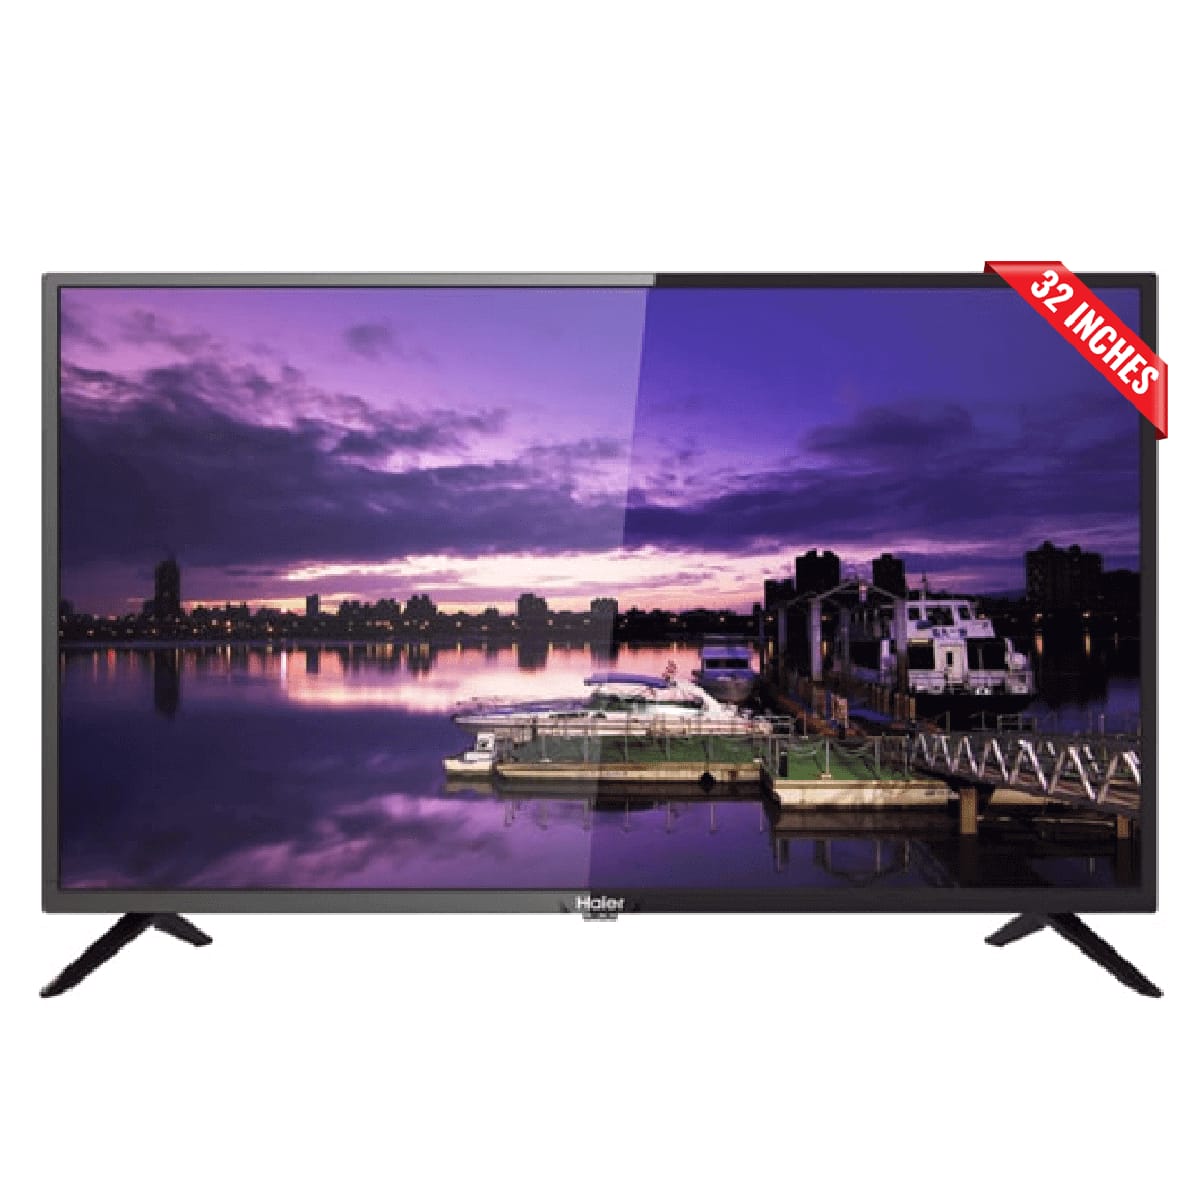 Haier 32 inch LED TV HD H-Cast Series LE32B9200M - Ace Material